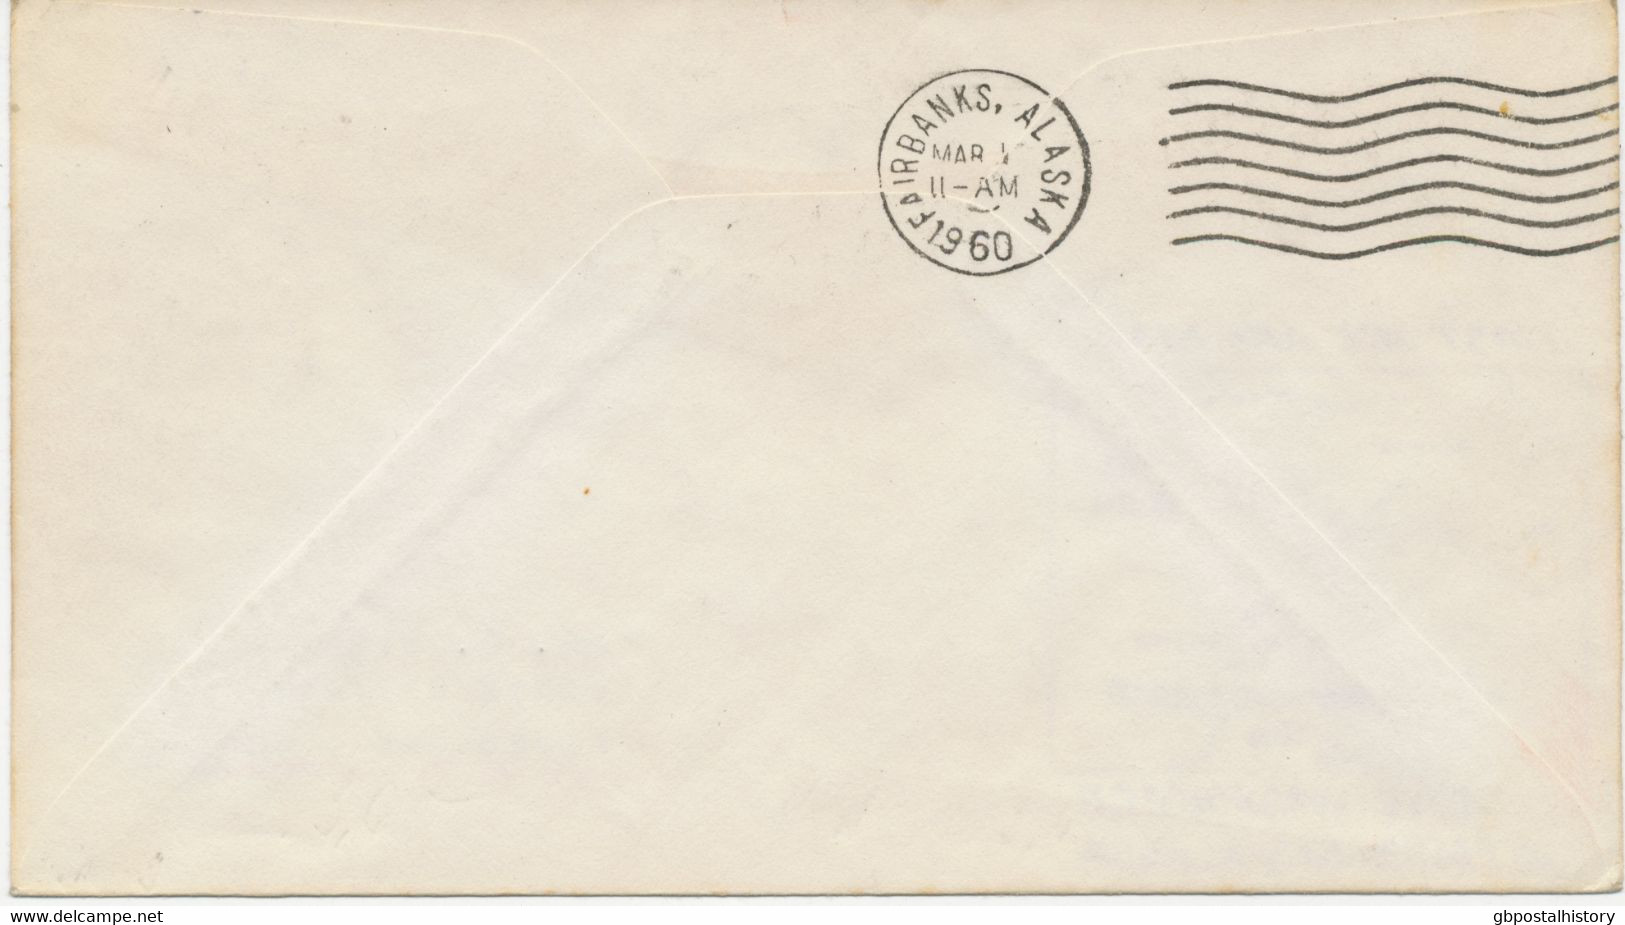 USA 1960 Selt. Kab.-Erstflug A.M. 20 - First Jet Air Mail Service - "Seattle, Washington - Fairbanks, Alaska" - 2c. 1941-1960 Cartas & Documentos